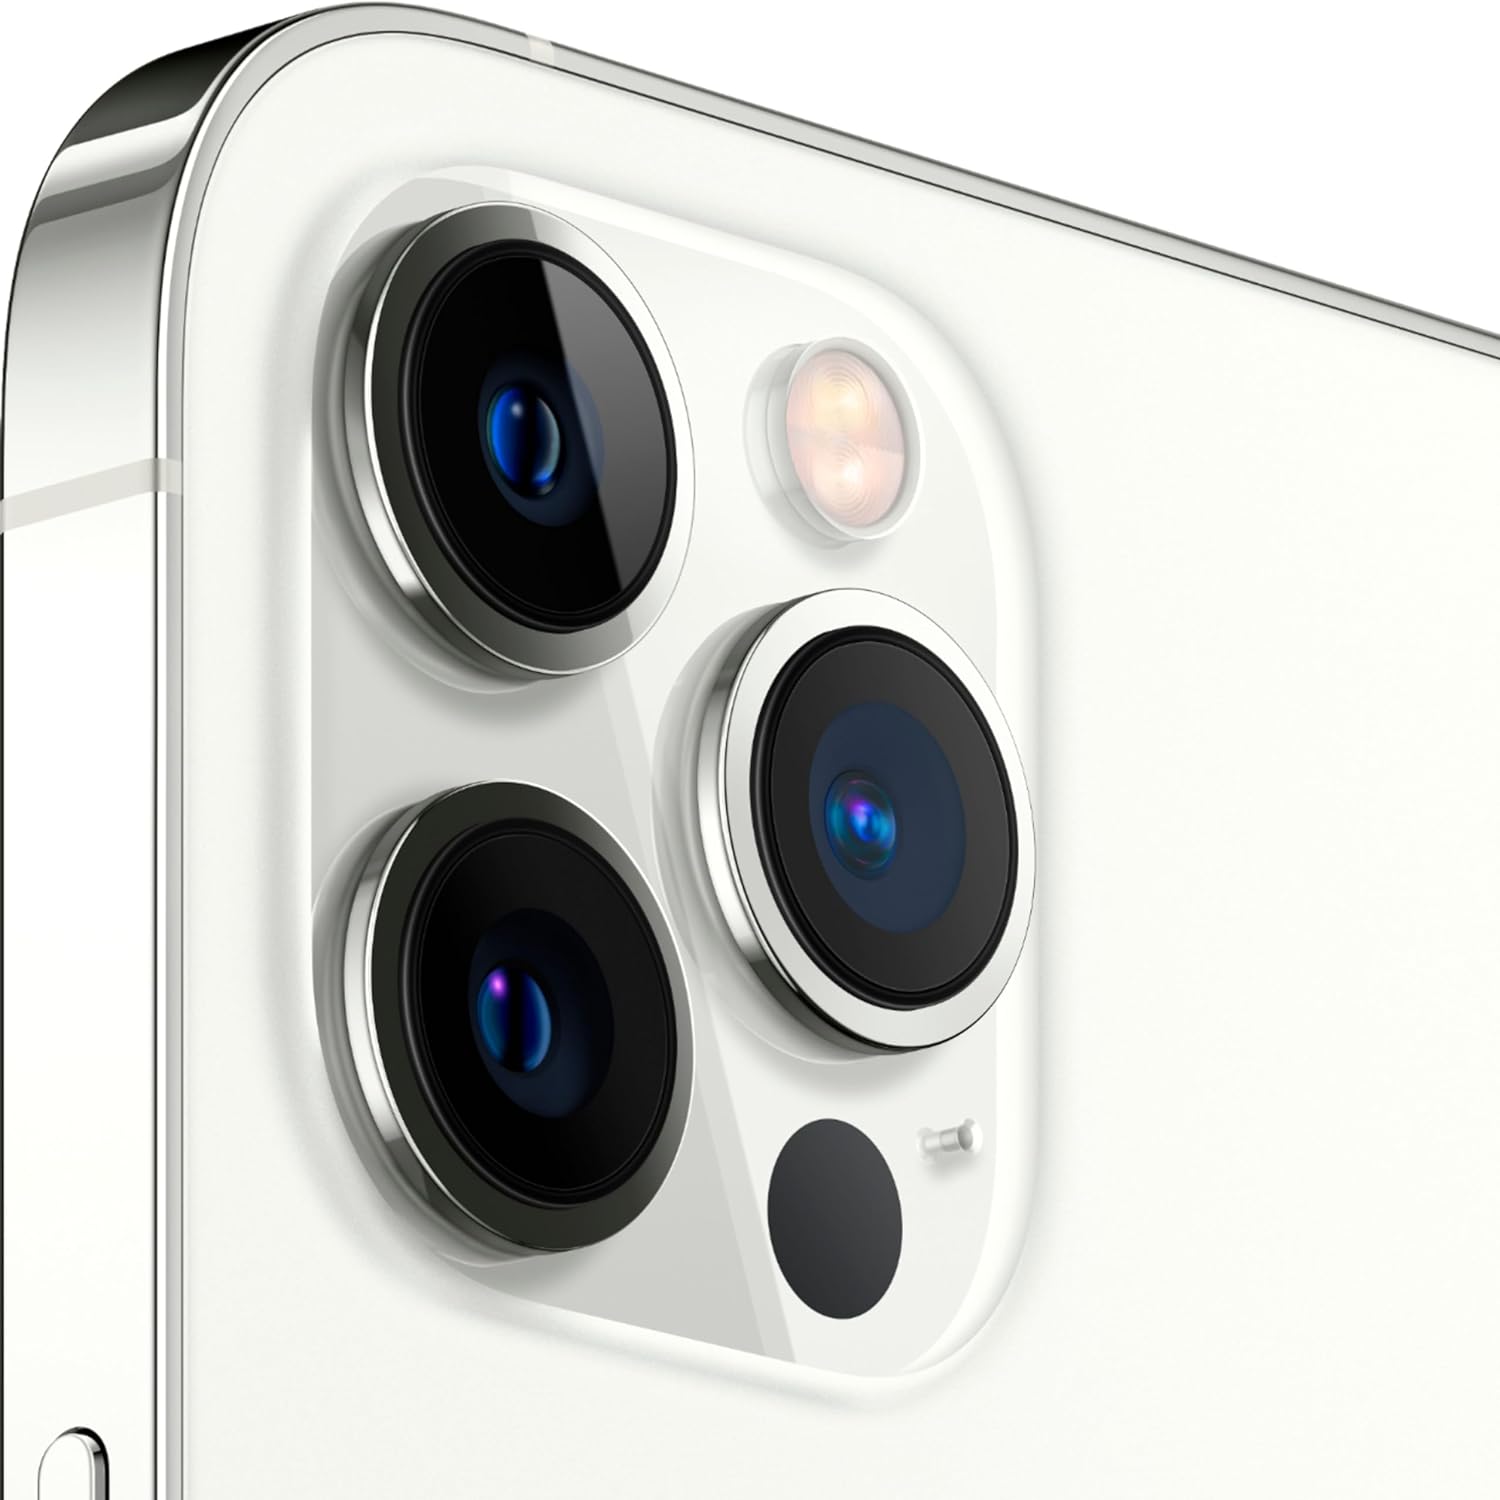 Apple iPhone 12 Pro Max 512GB (Unlocked) - Silver (Used)